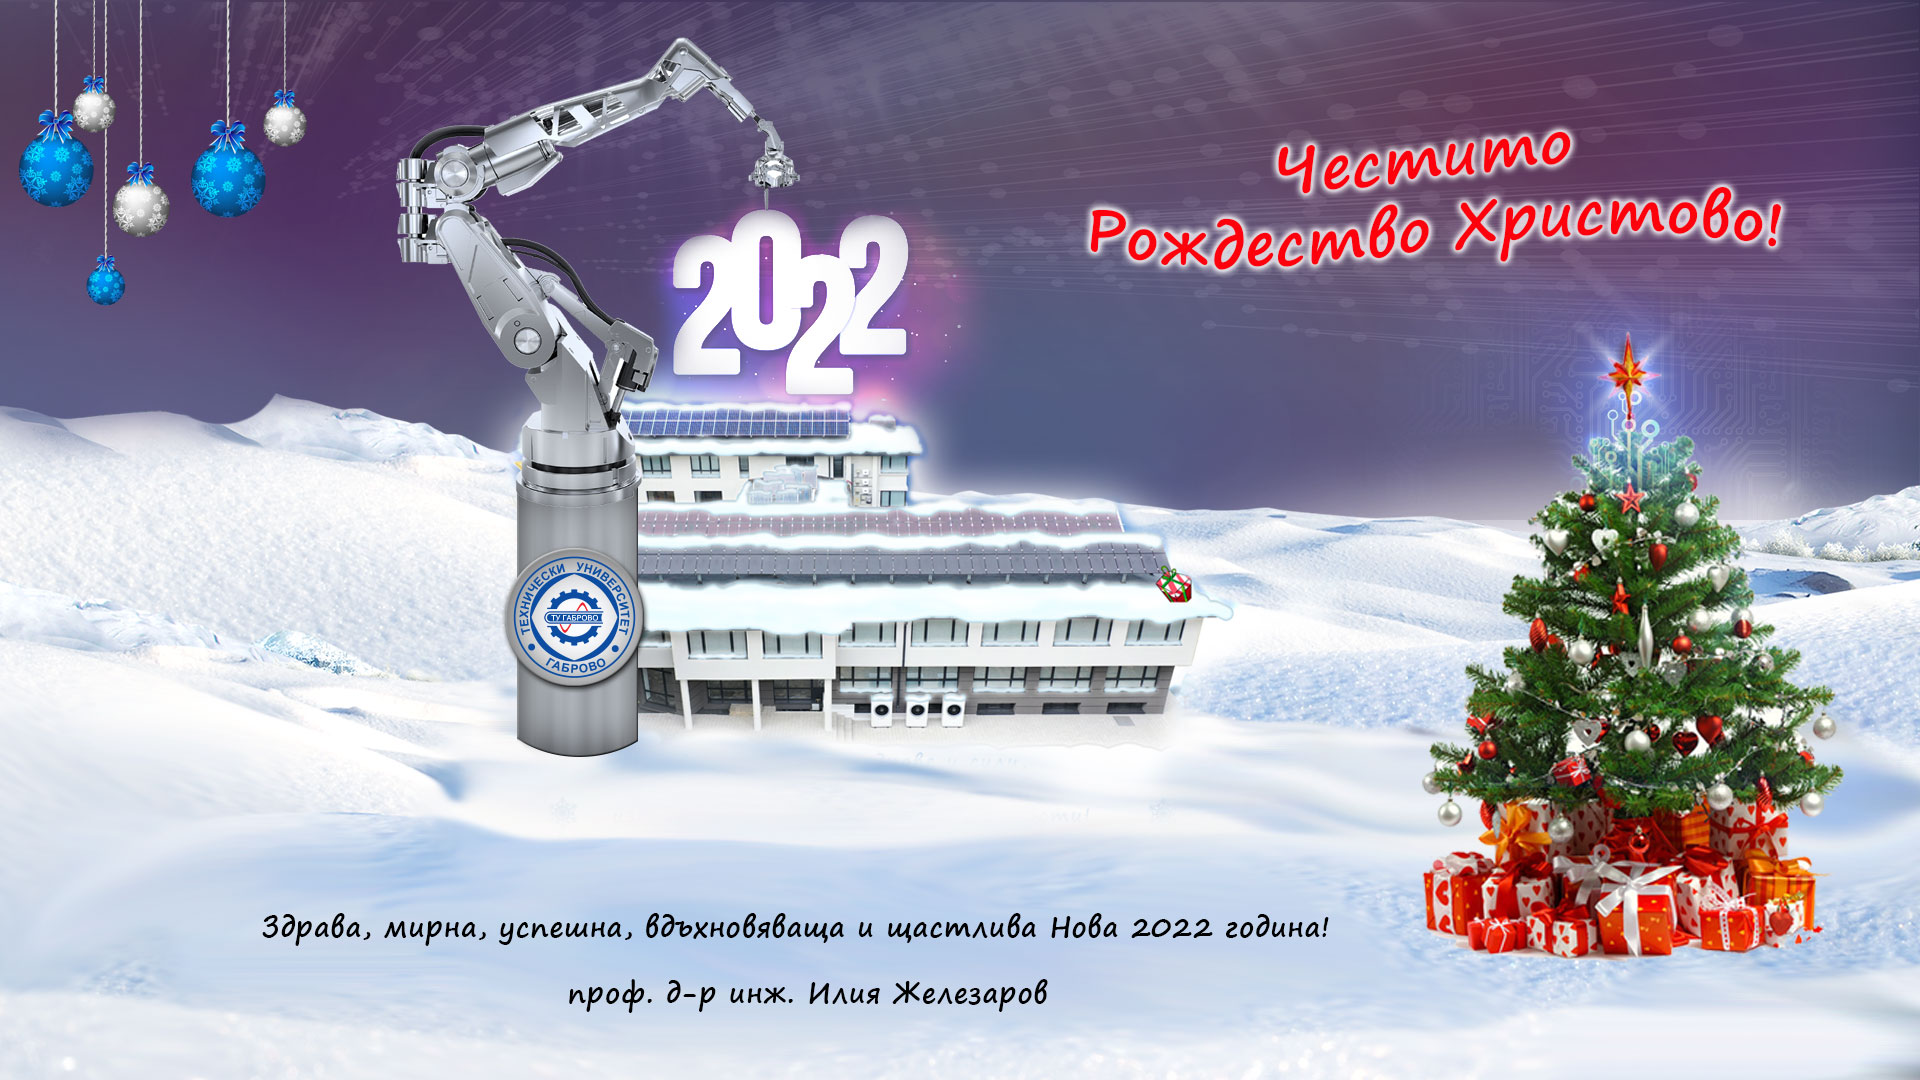 TU Happy holidays 2022 BG